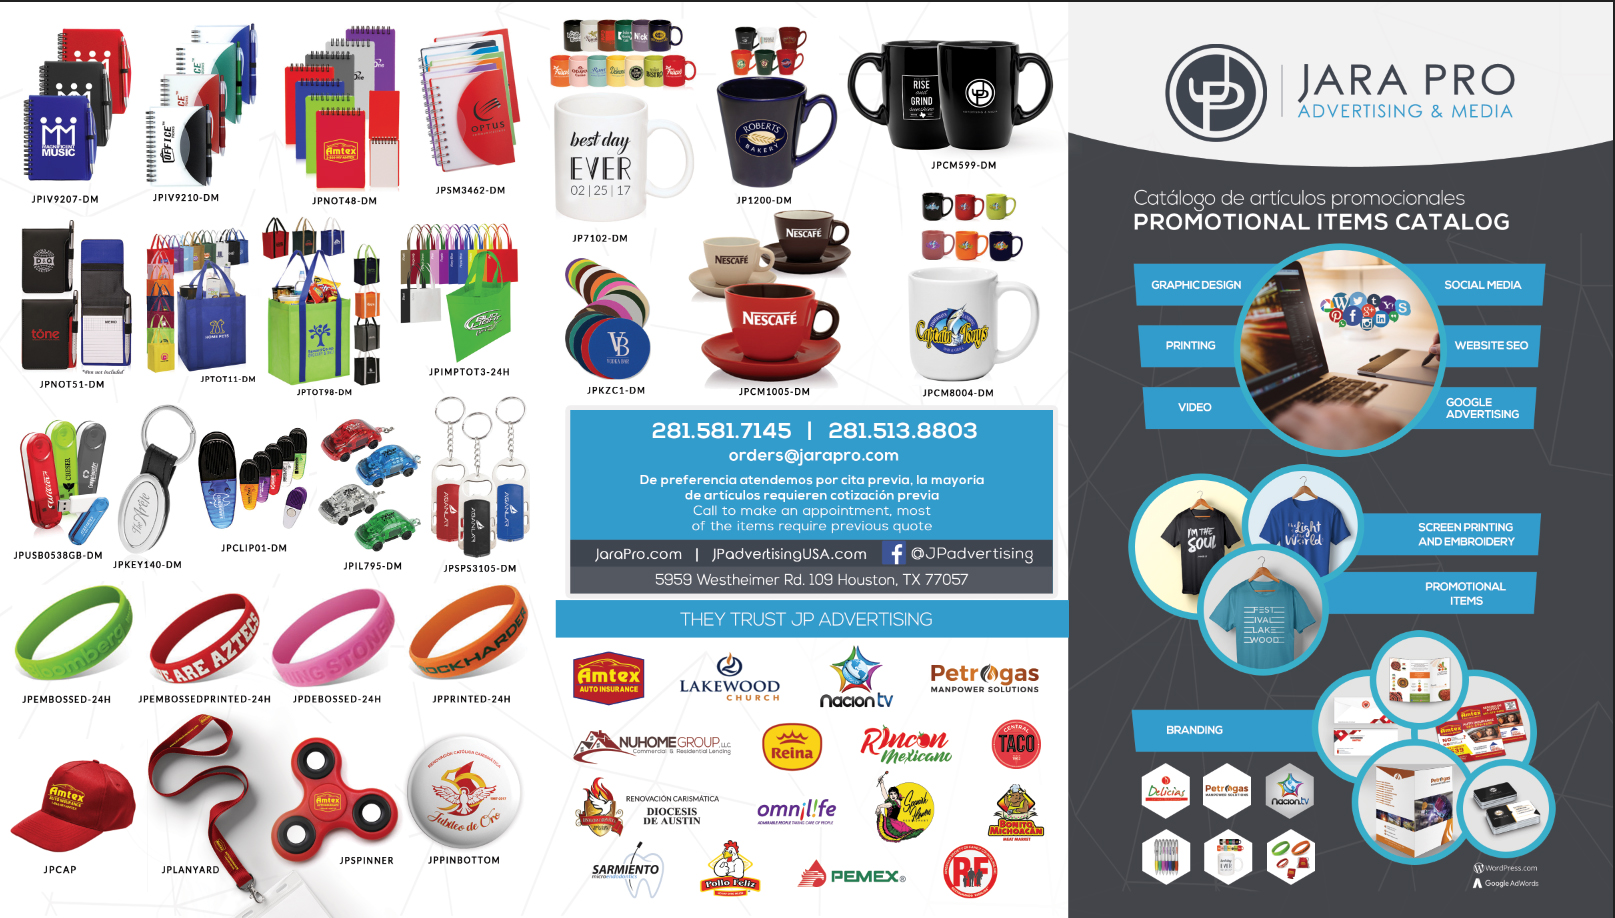 Imprenta y promocionales en Houston | Promotional items in Houston Texas | Jara Pro advertising